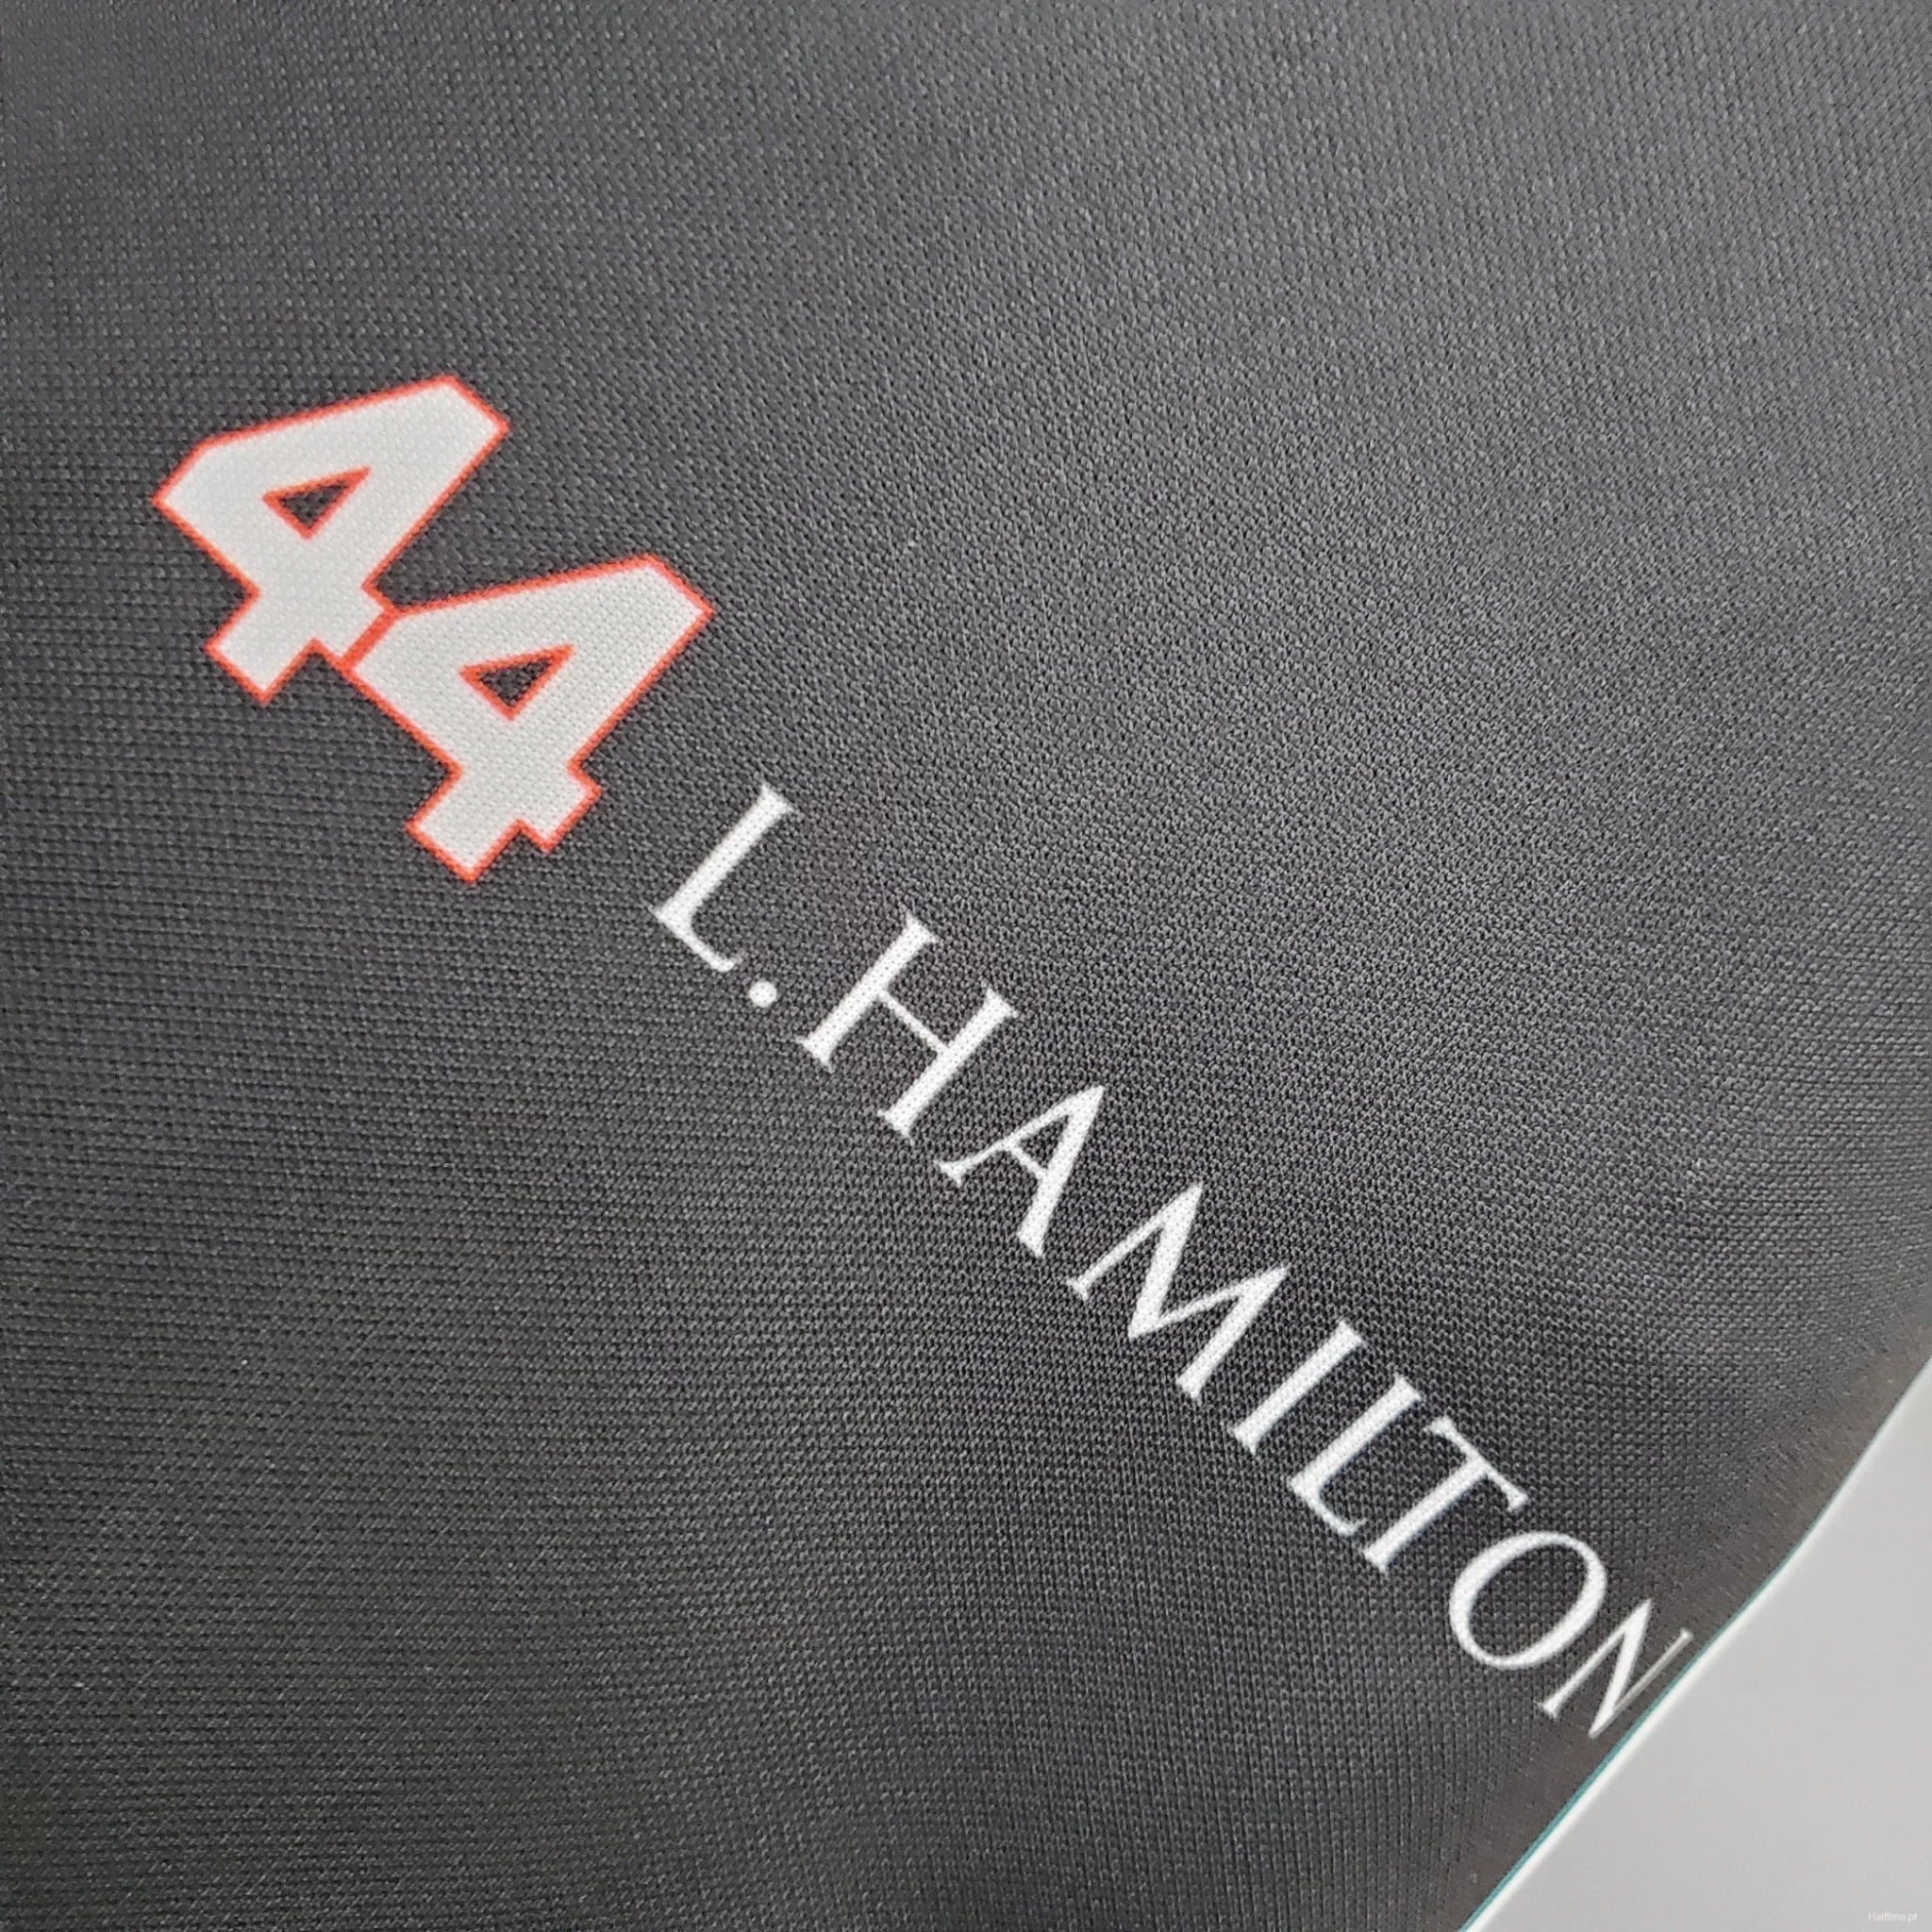 2021 Mercedes Lewis Hamilton Formula One racing T-Shirt